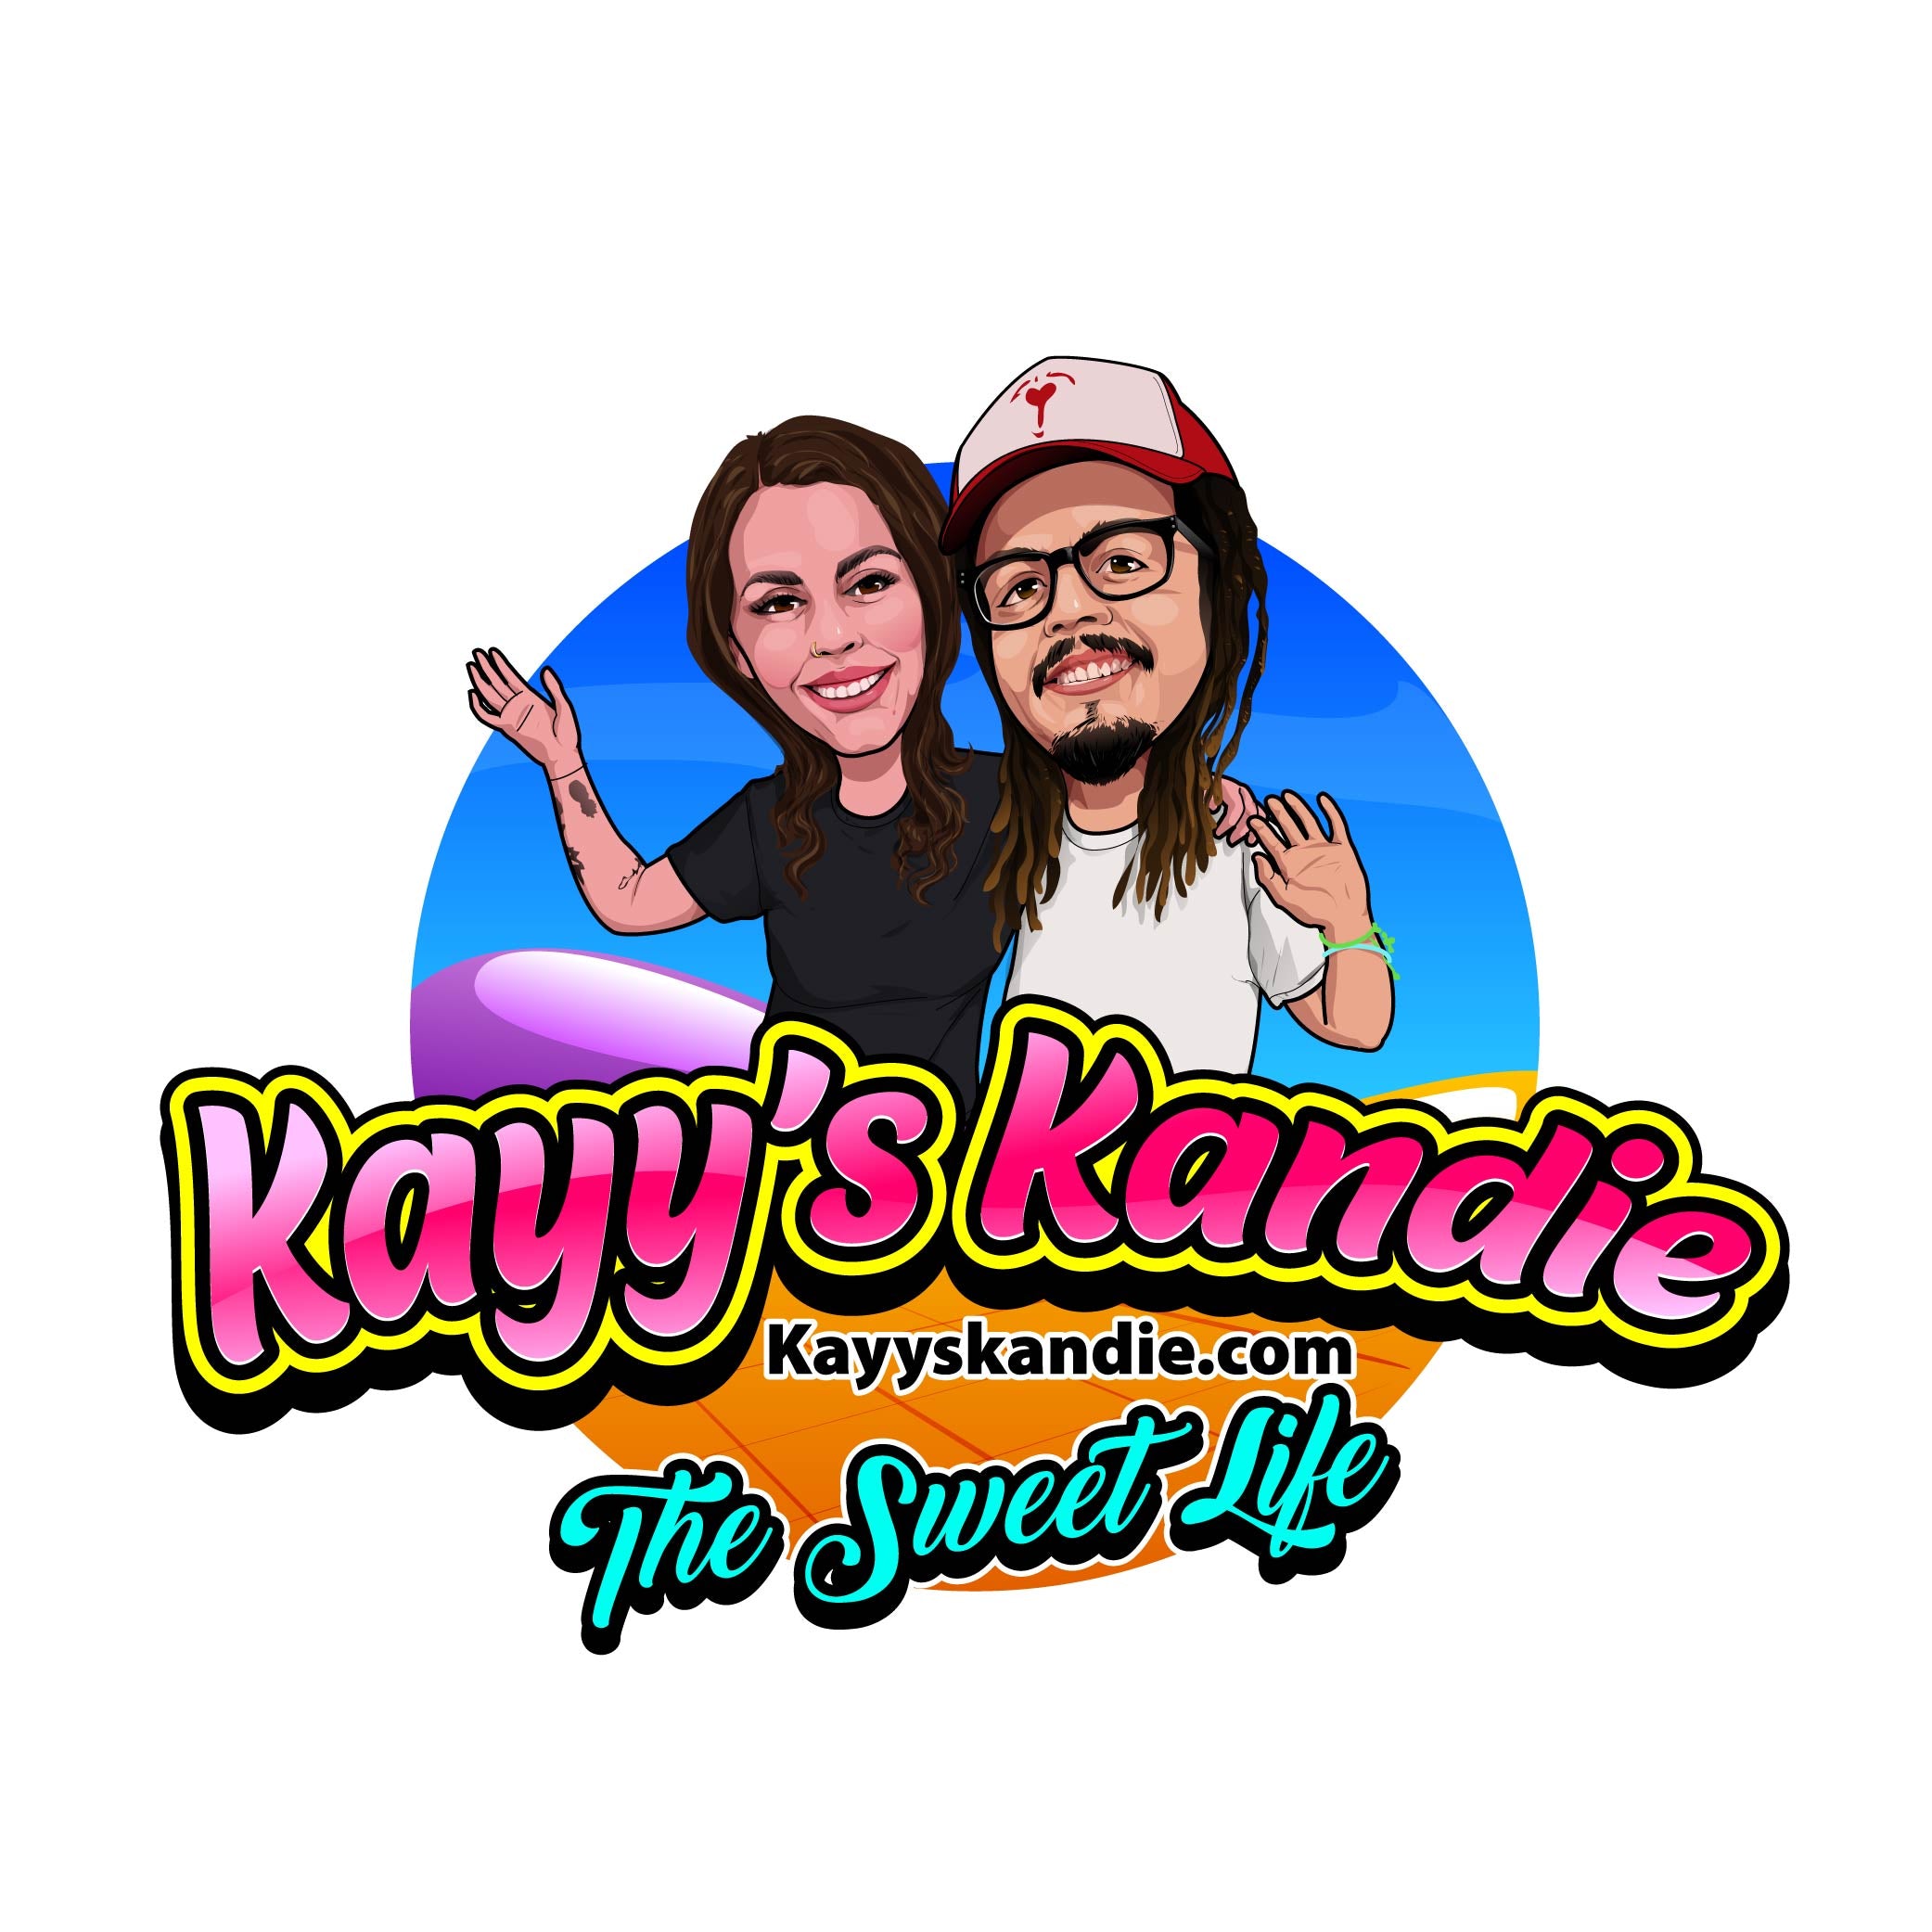 Kayy's Kandie – kayyskandie